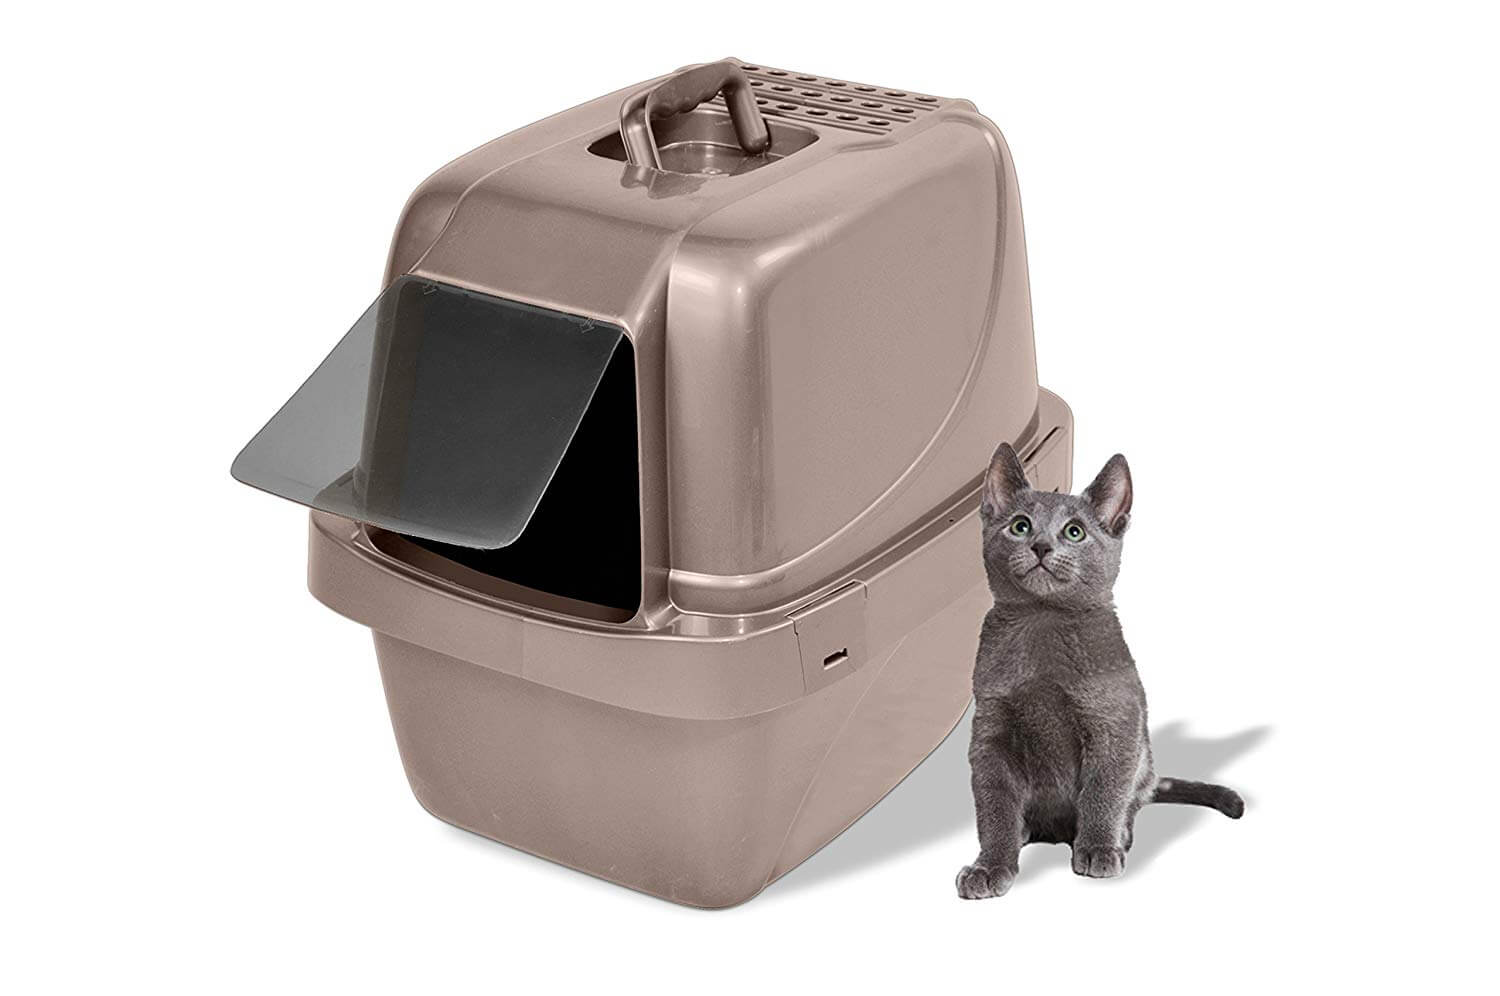 sifting cat litter box